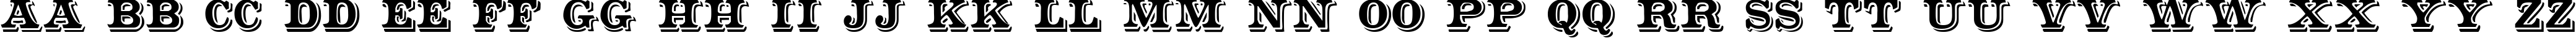 Пример написания английского алфавита шрифтом Shadowed Serif